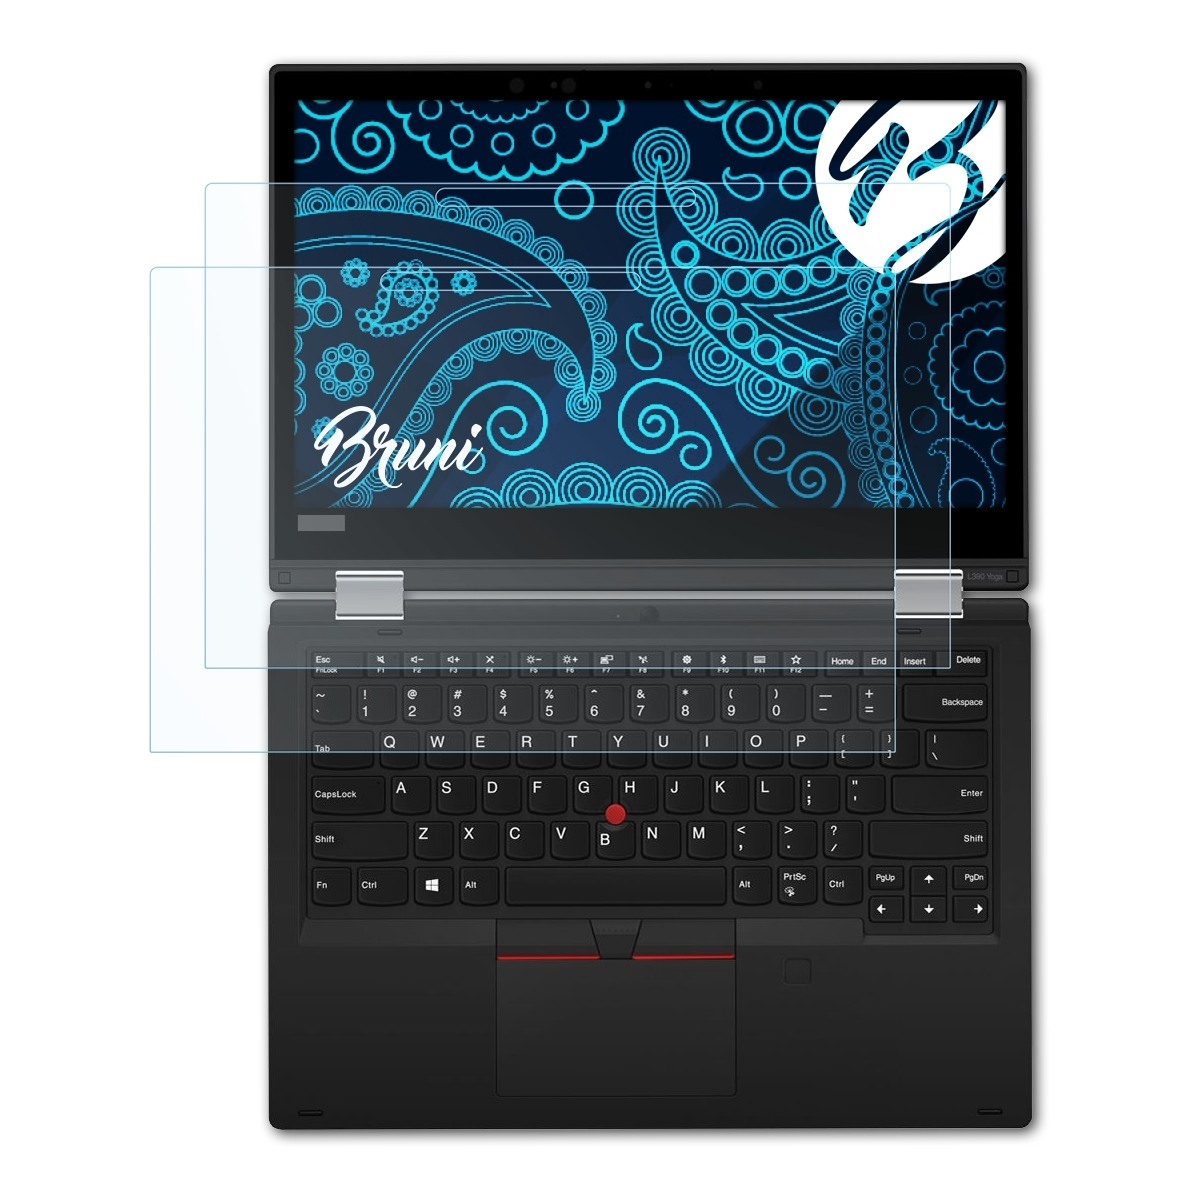 Lenovo 2x ThinkPad Yoga) Schutzfolie(für Basics-Clear BRUNI L390